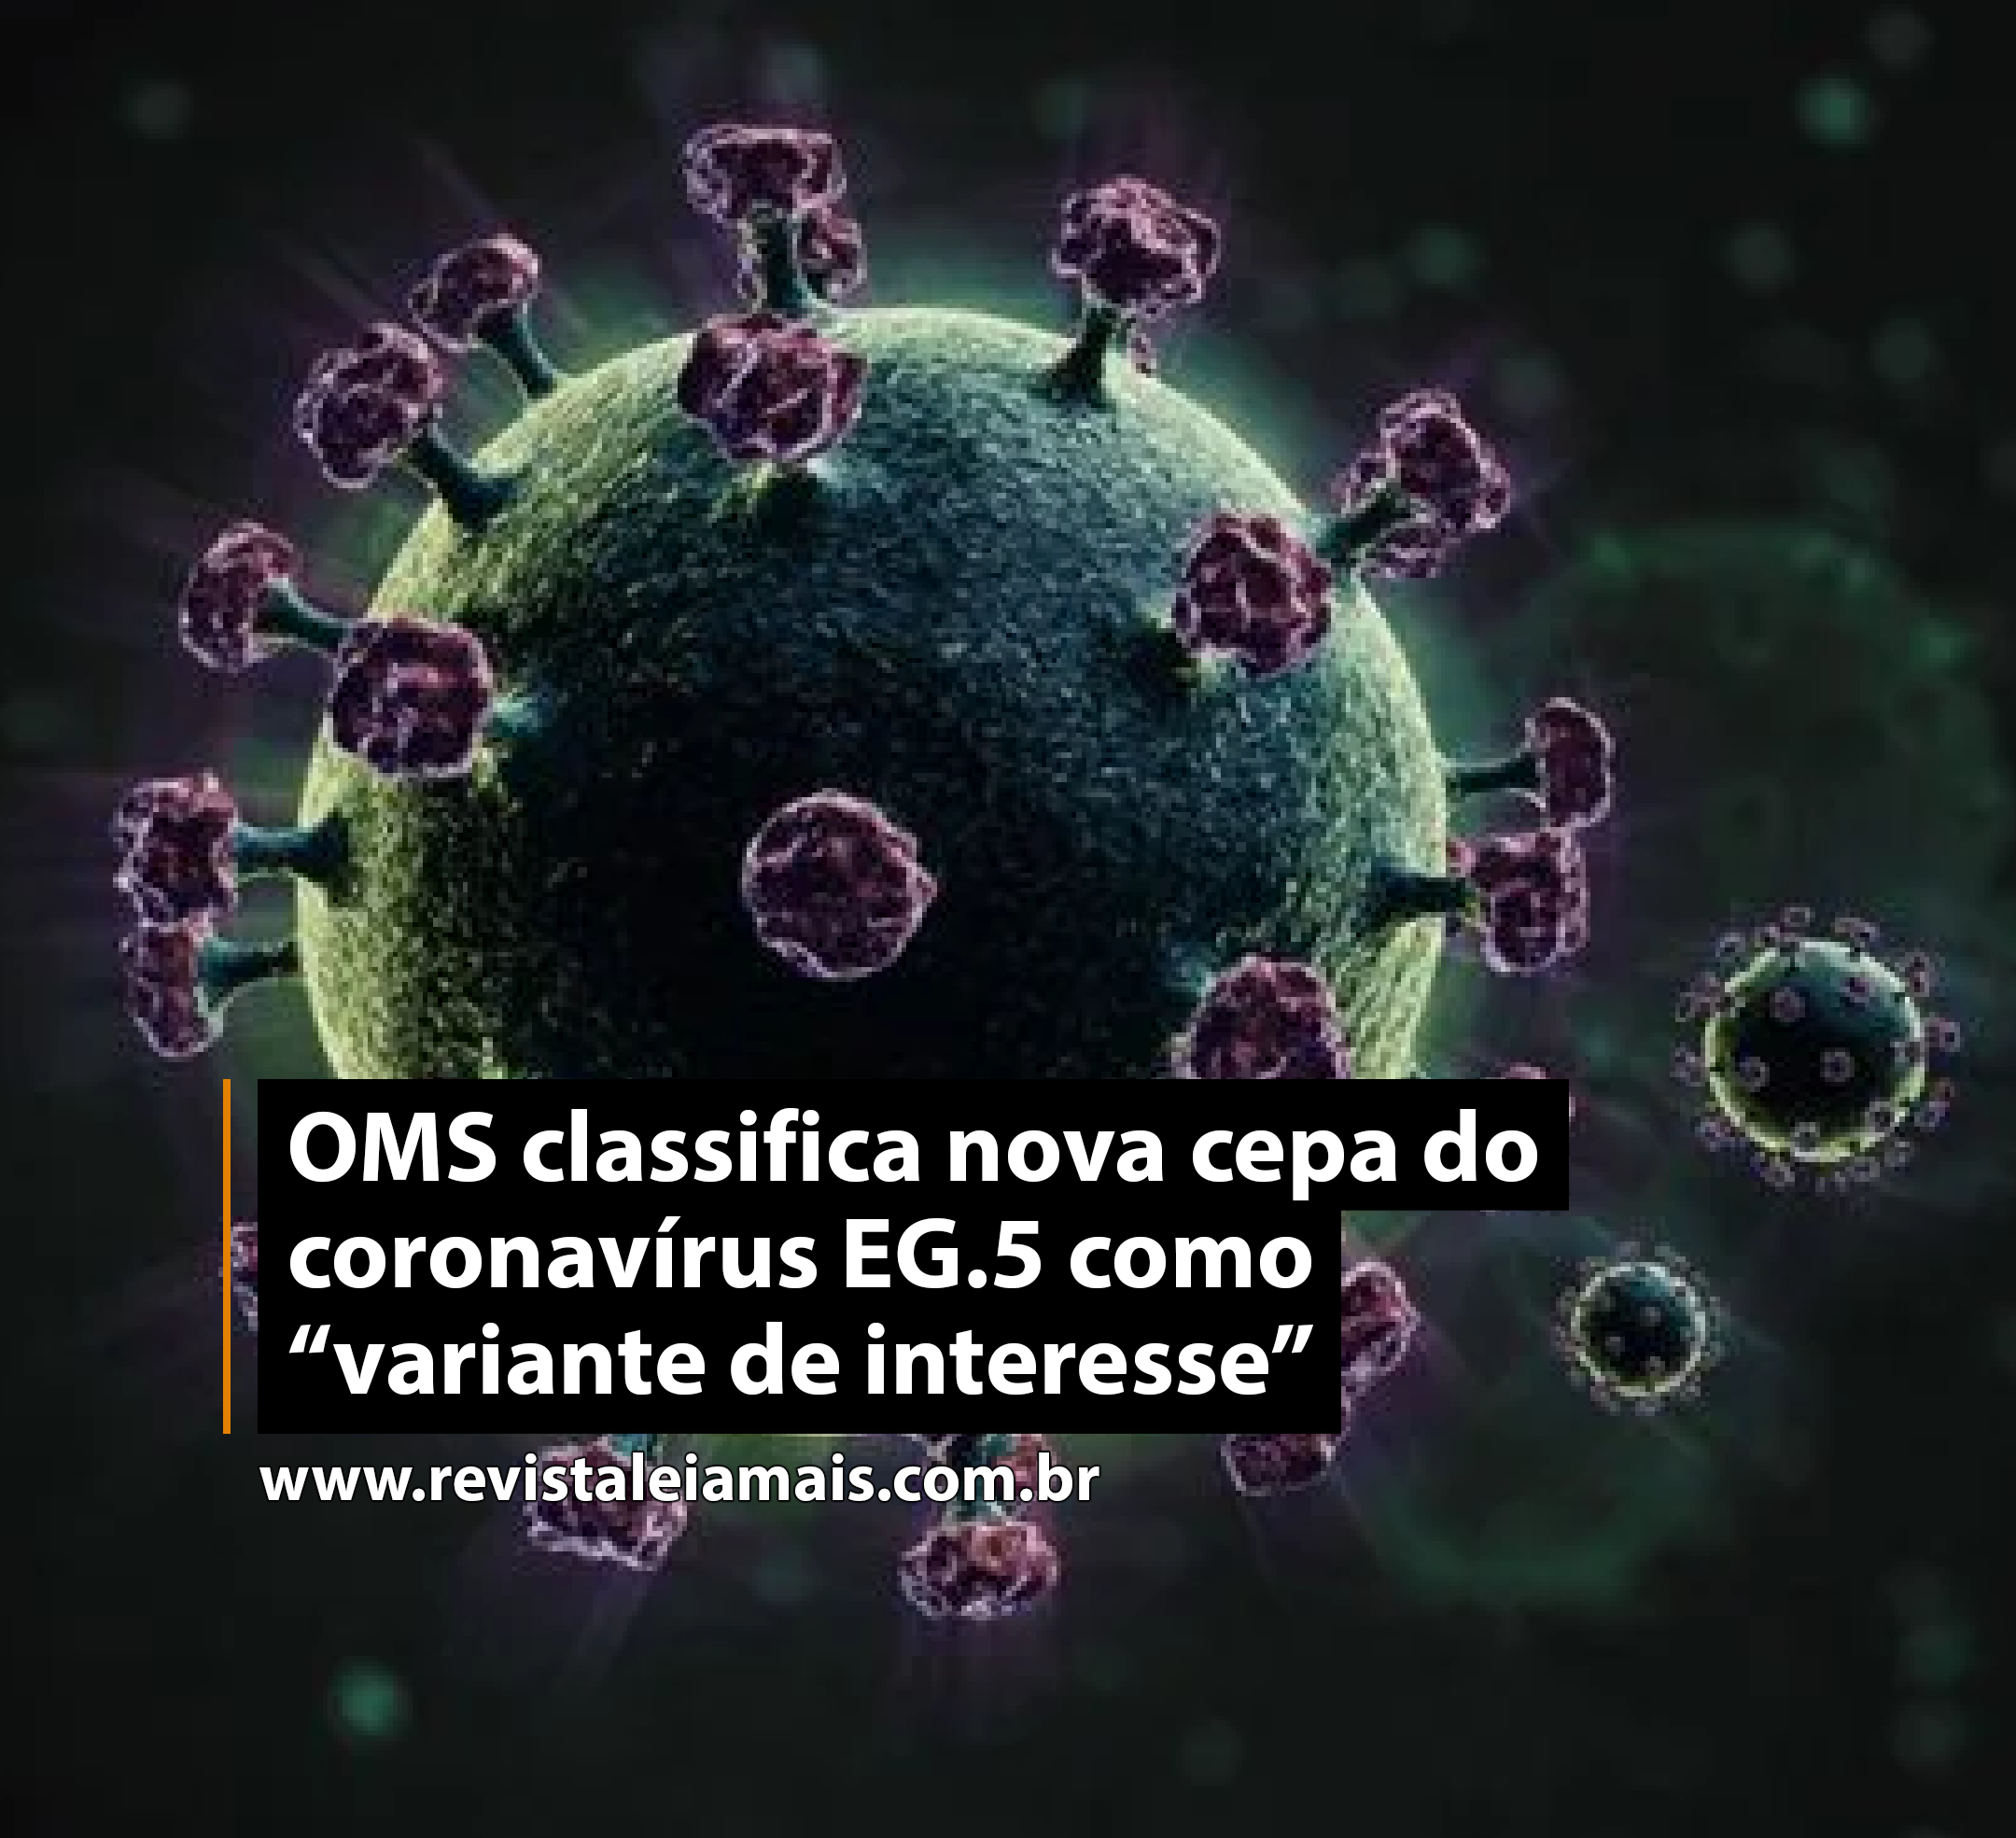 OMS classifica nova cepa do coronavírus EG.5 como “variante de interesse”